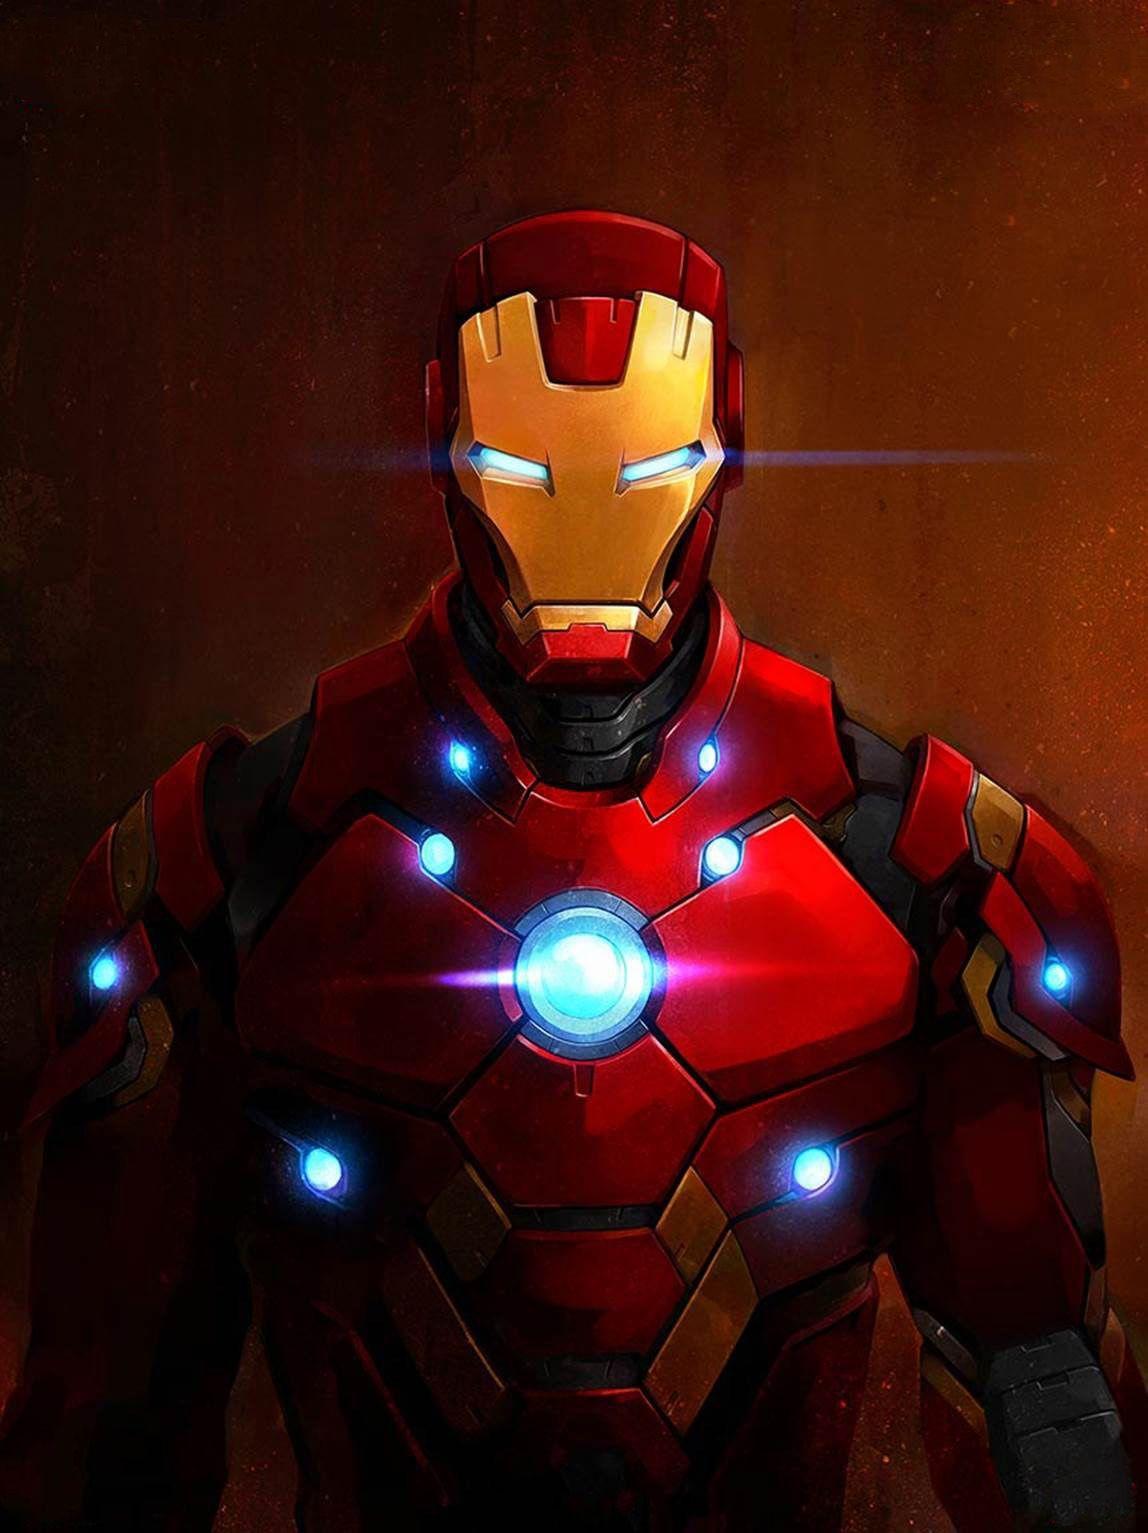 Iron Man Mark 46 (Bleeding edge). Iron man wallpaper, Iron man, Iron man art